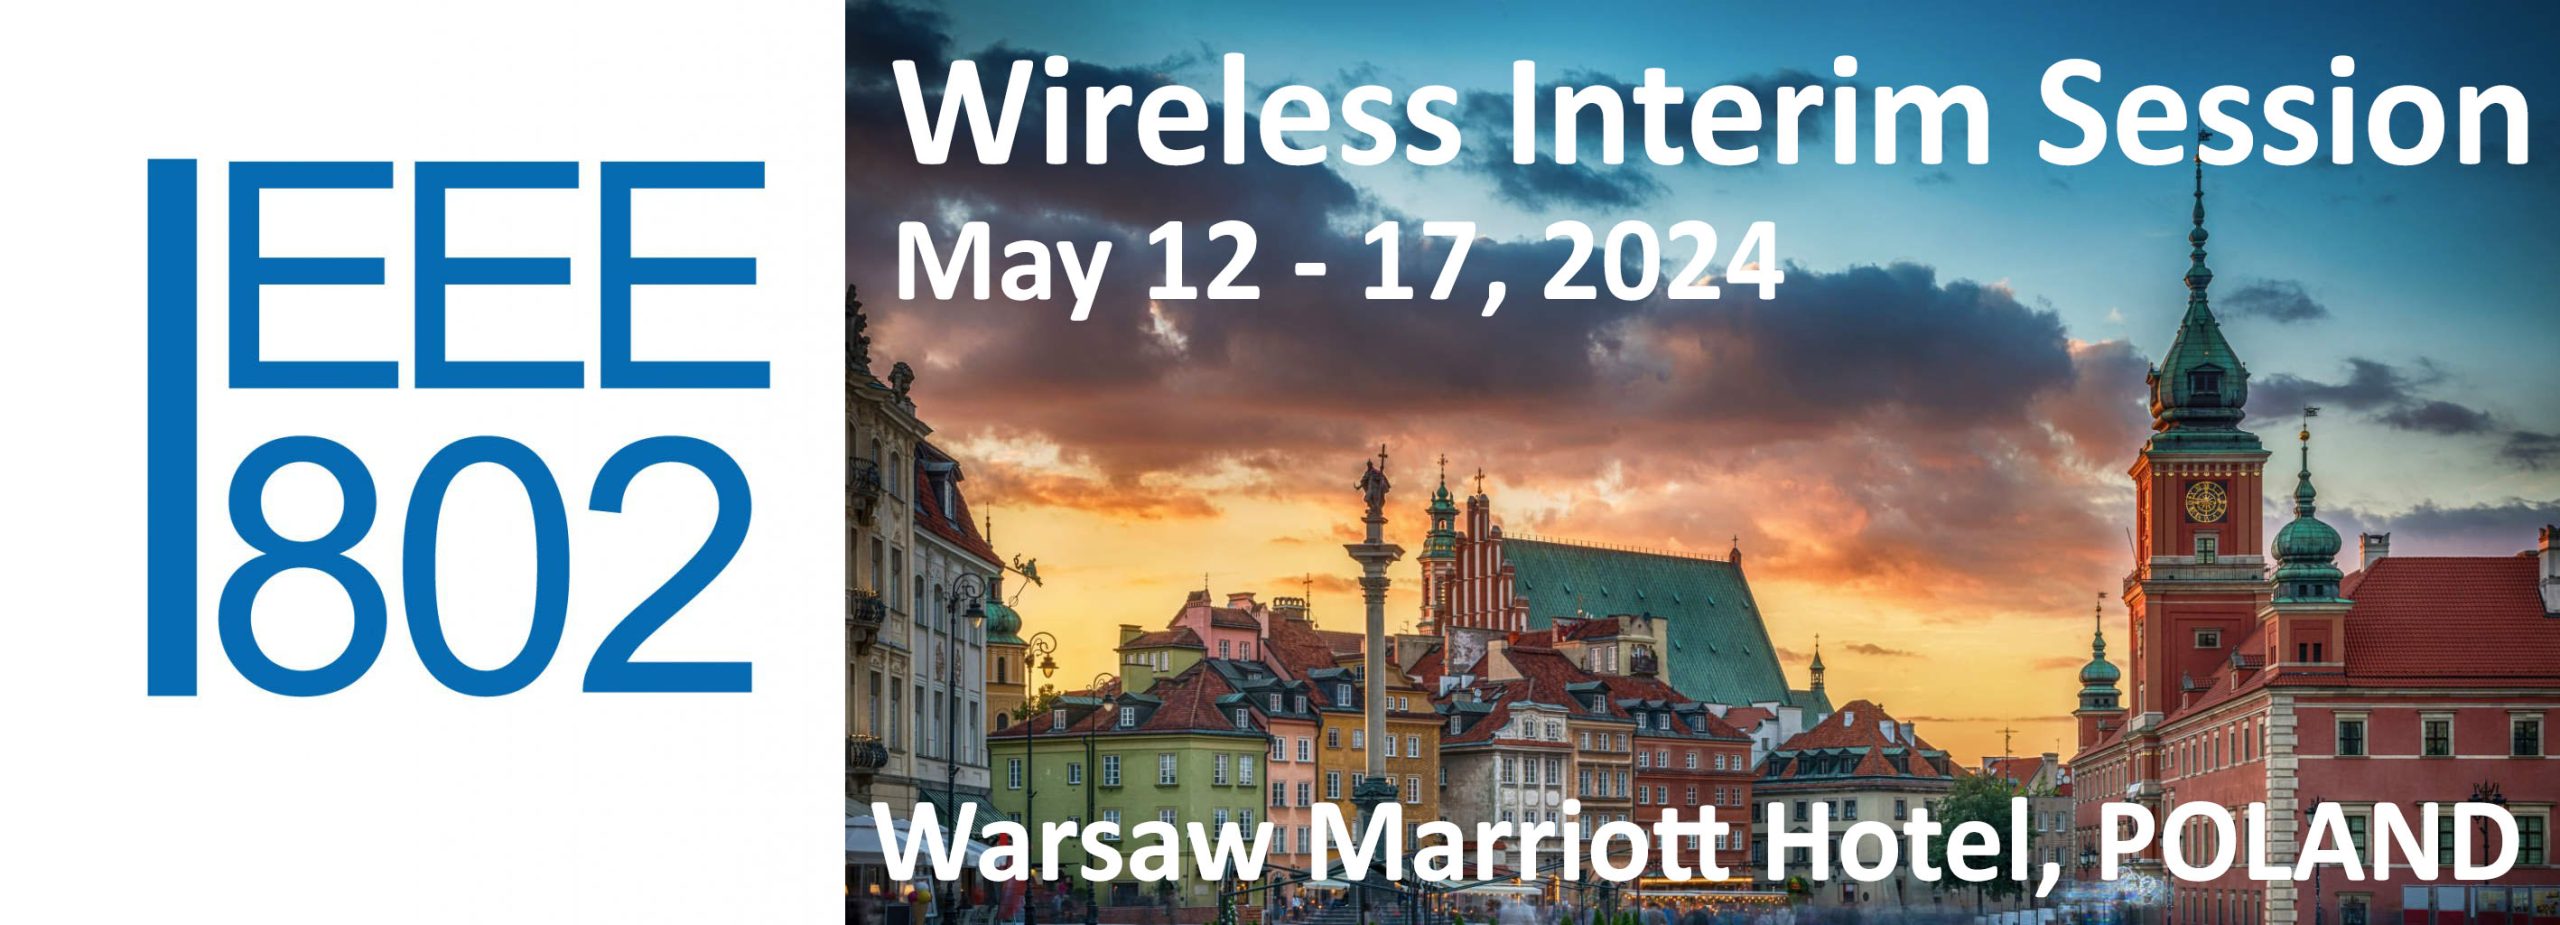 IEEE 802 Wireless Interim Session